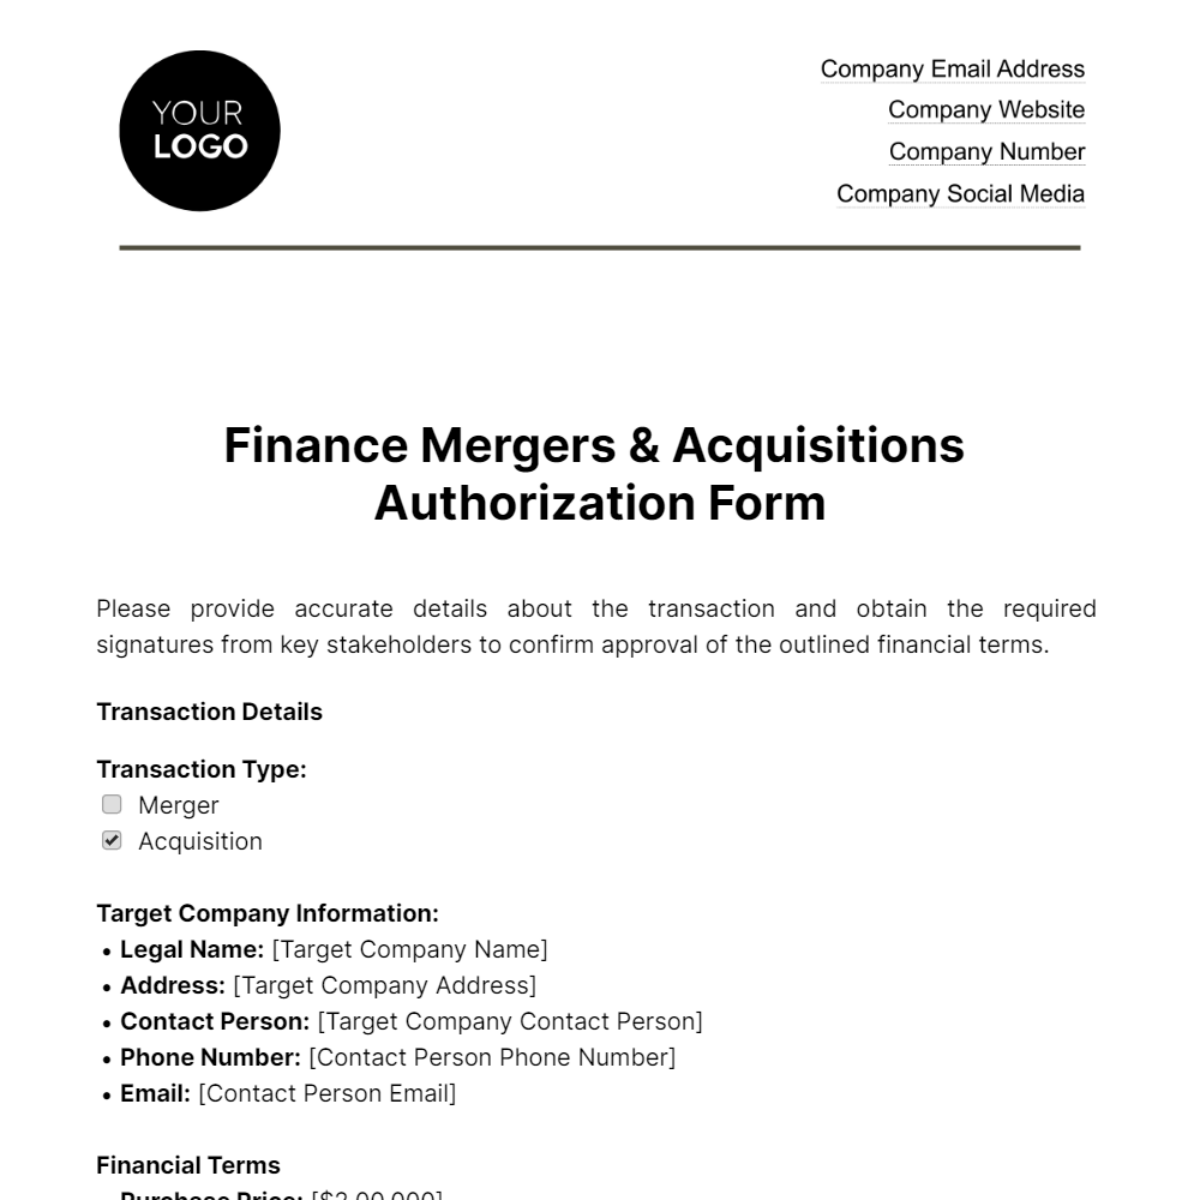 Finance Mergers & Acquisitions Authorization Form Template